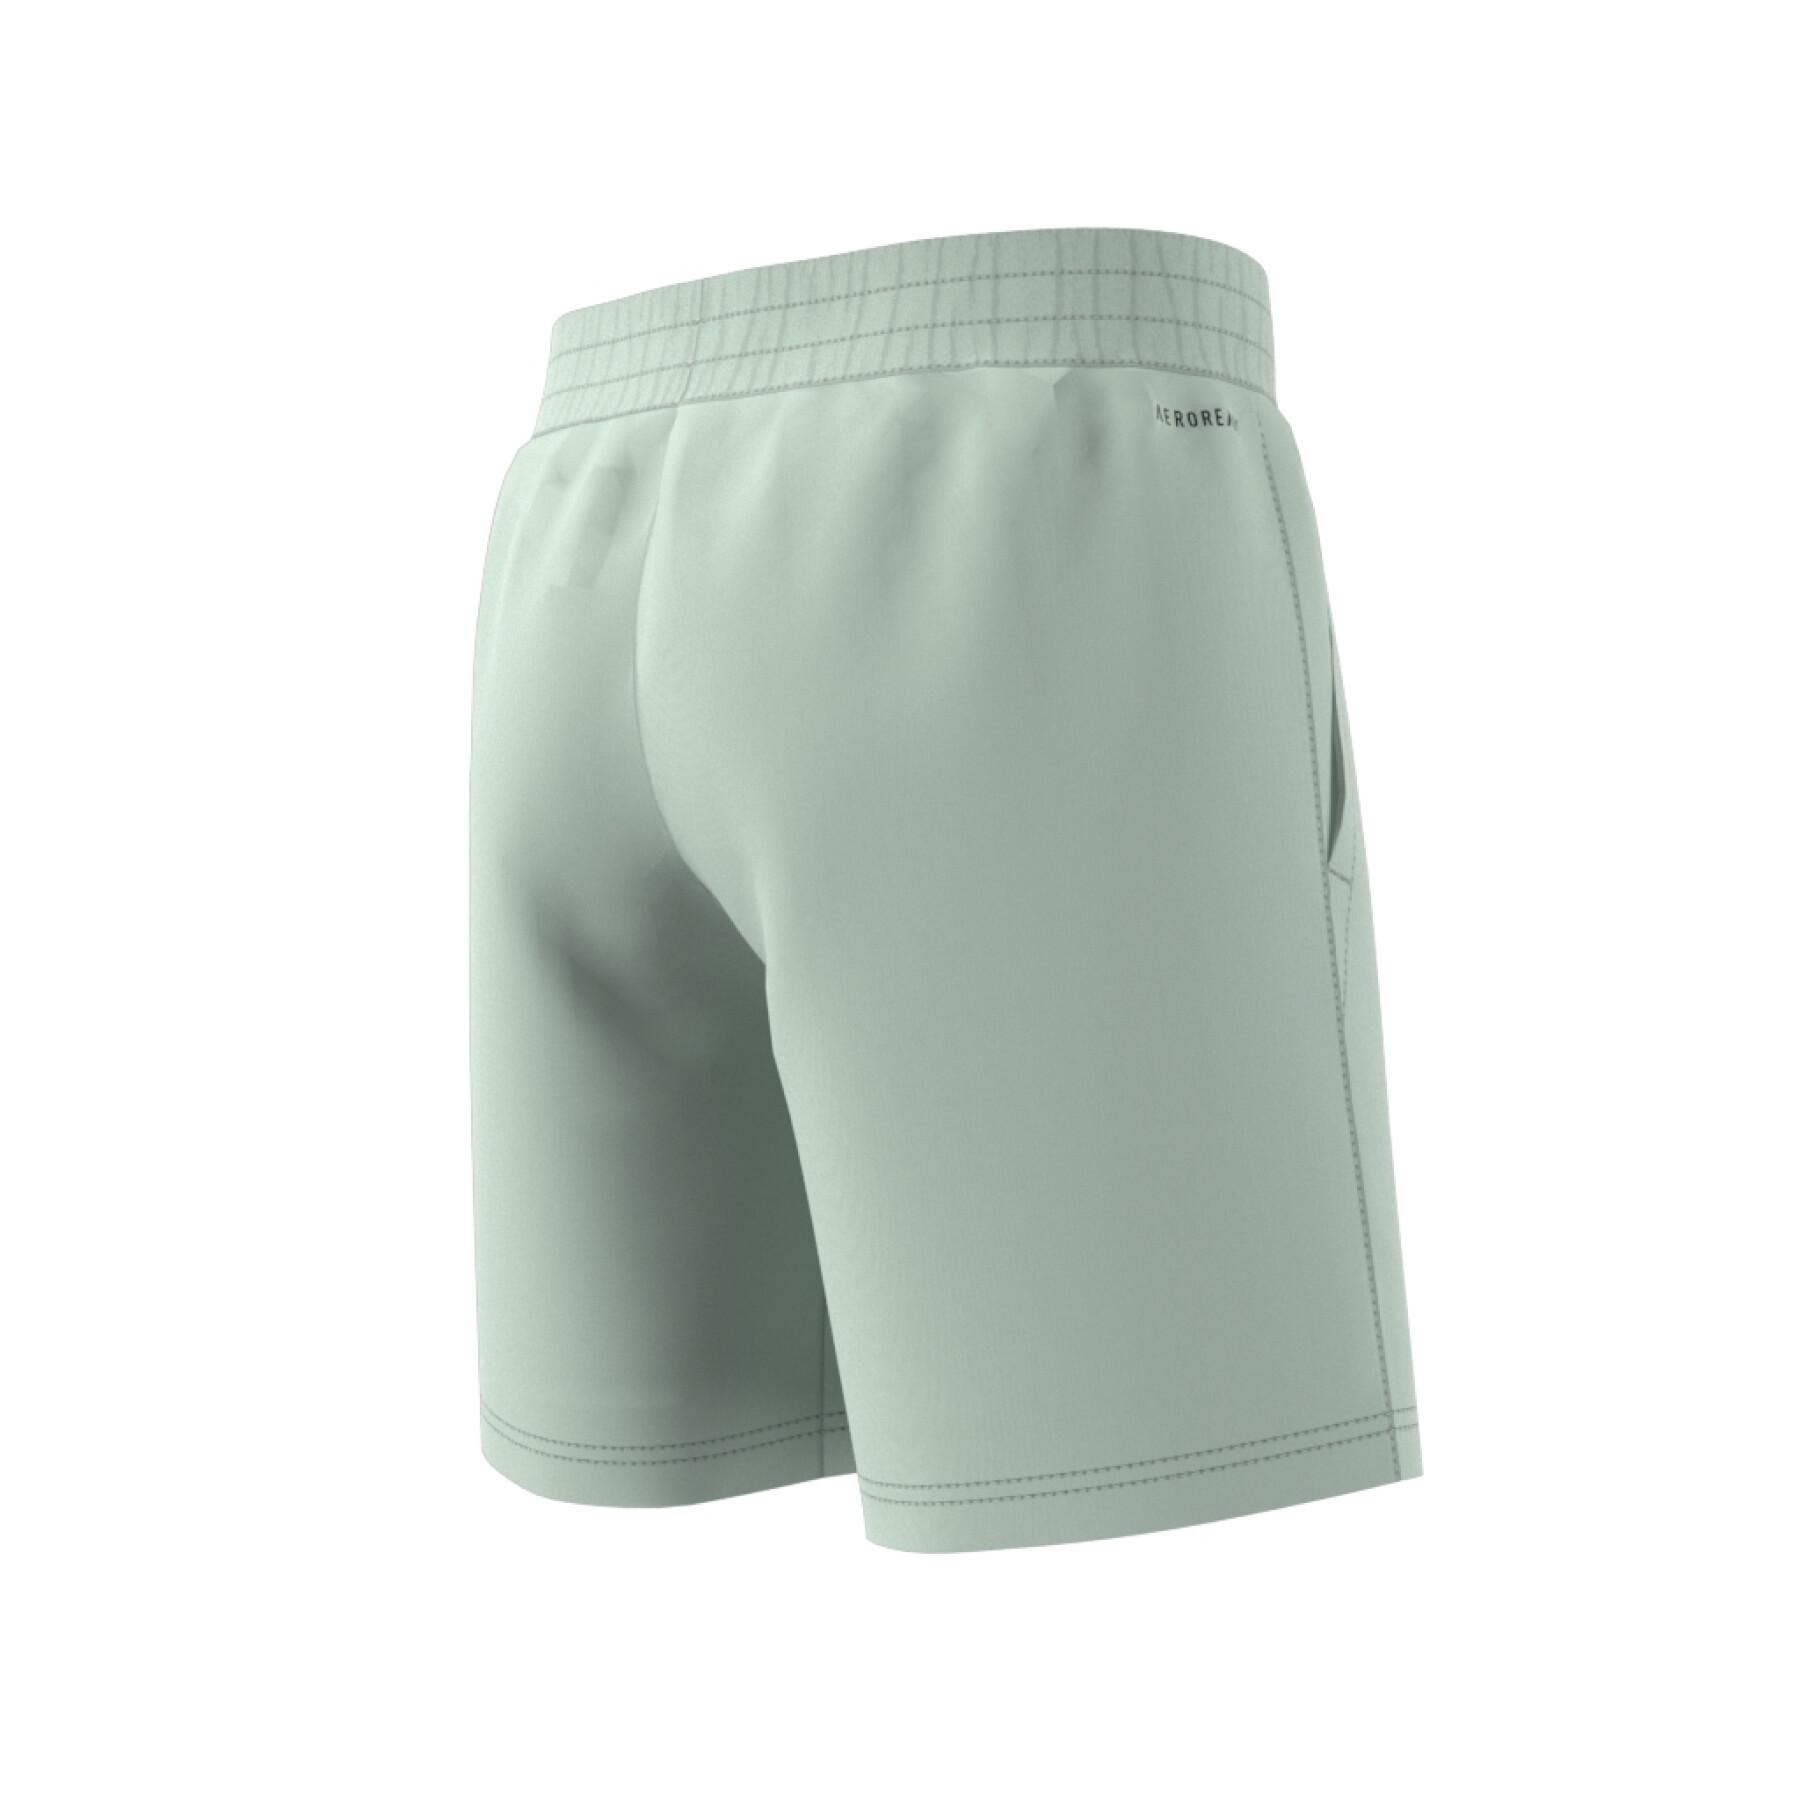 Tennis club shorts for kids adidas